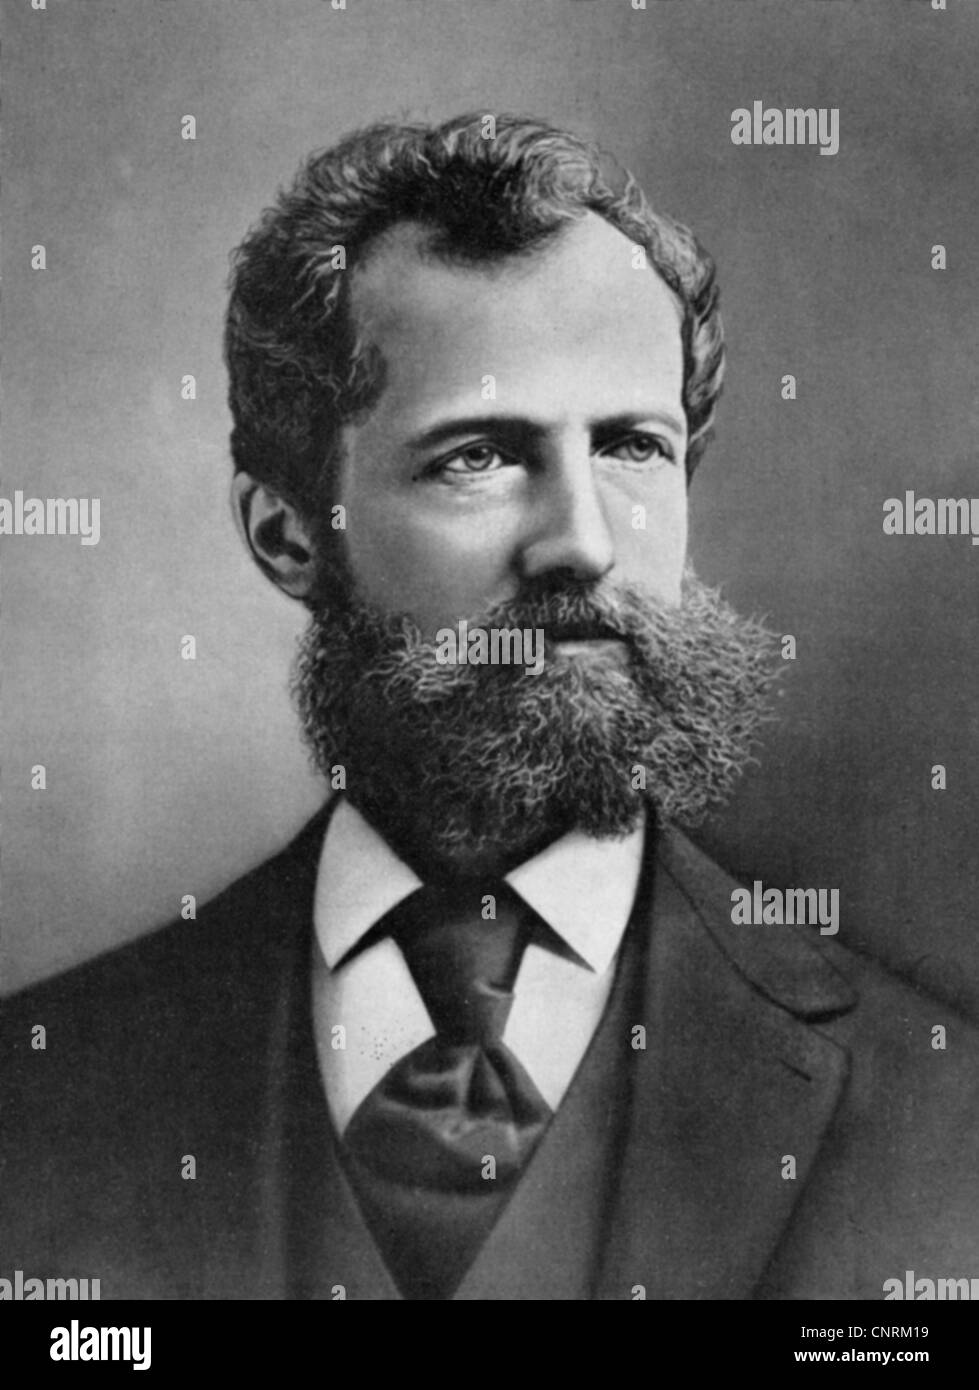 Mergenthaler, Ottmar, 11.5.1854 - 28.10.1899, German clockmaker, inventor of the Linotype machine, portrait, late 19th century, Stock Photo